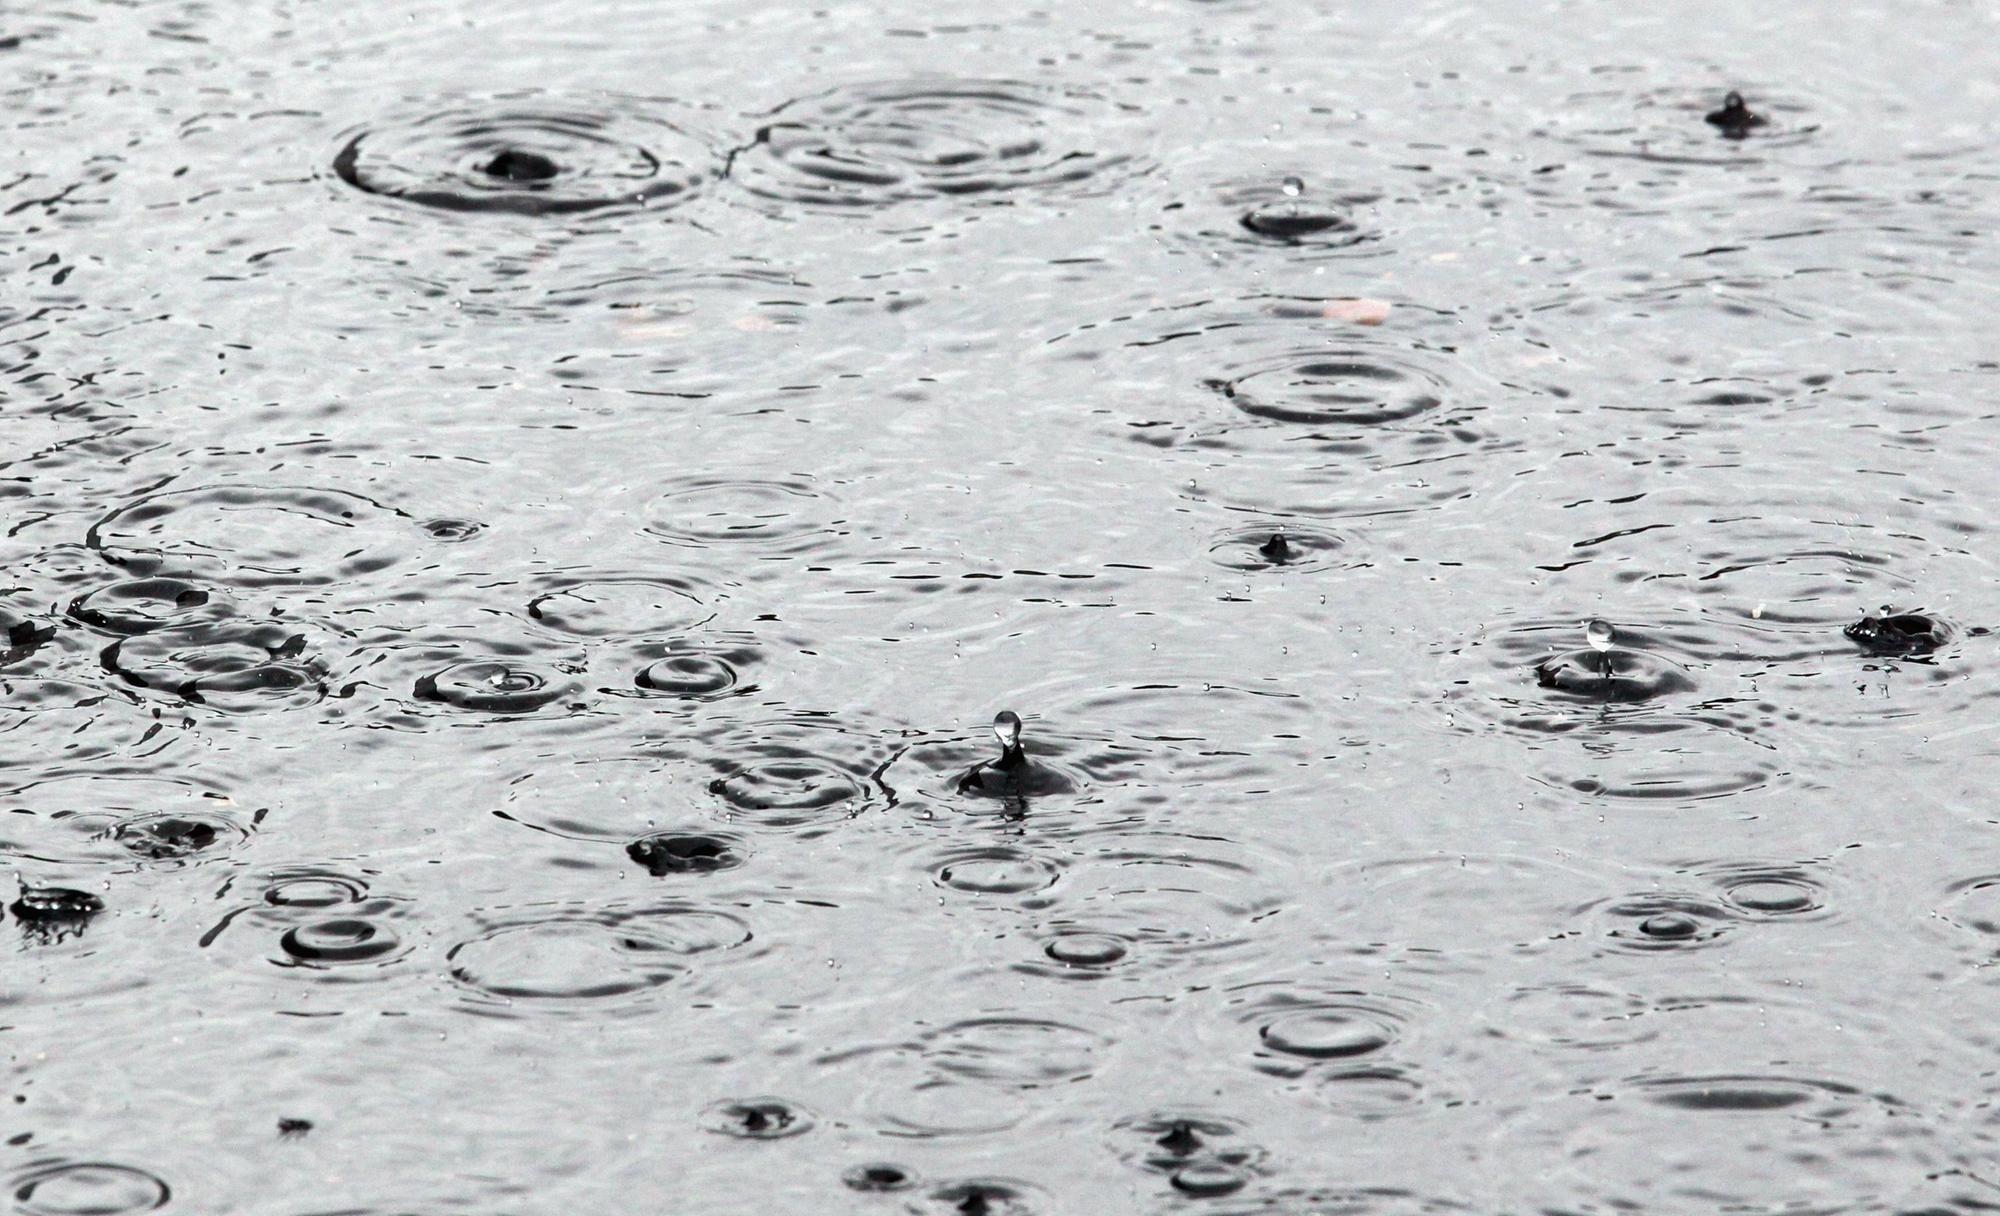 Weather raining Blood. Raindrops Falling on Water. Rain damage